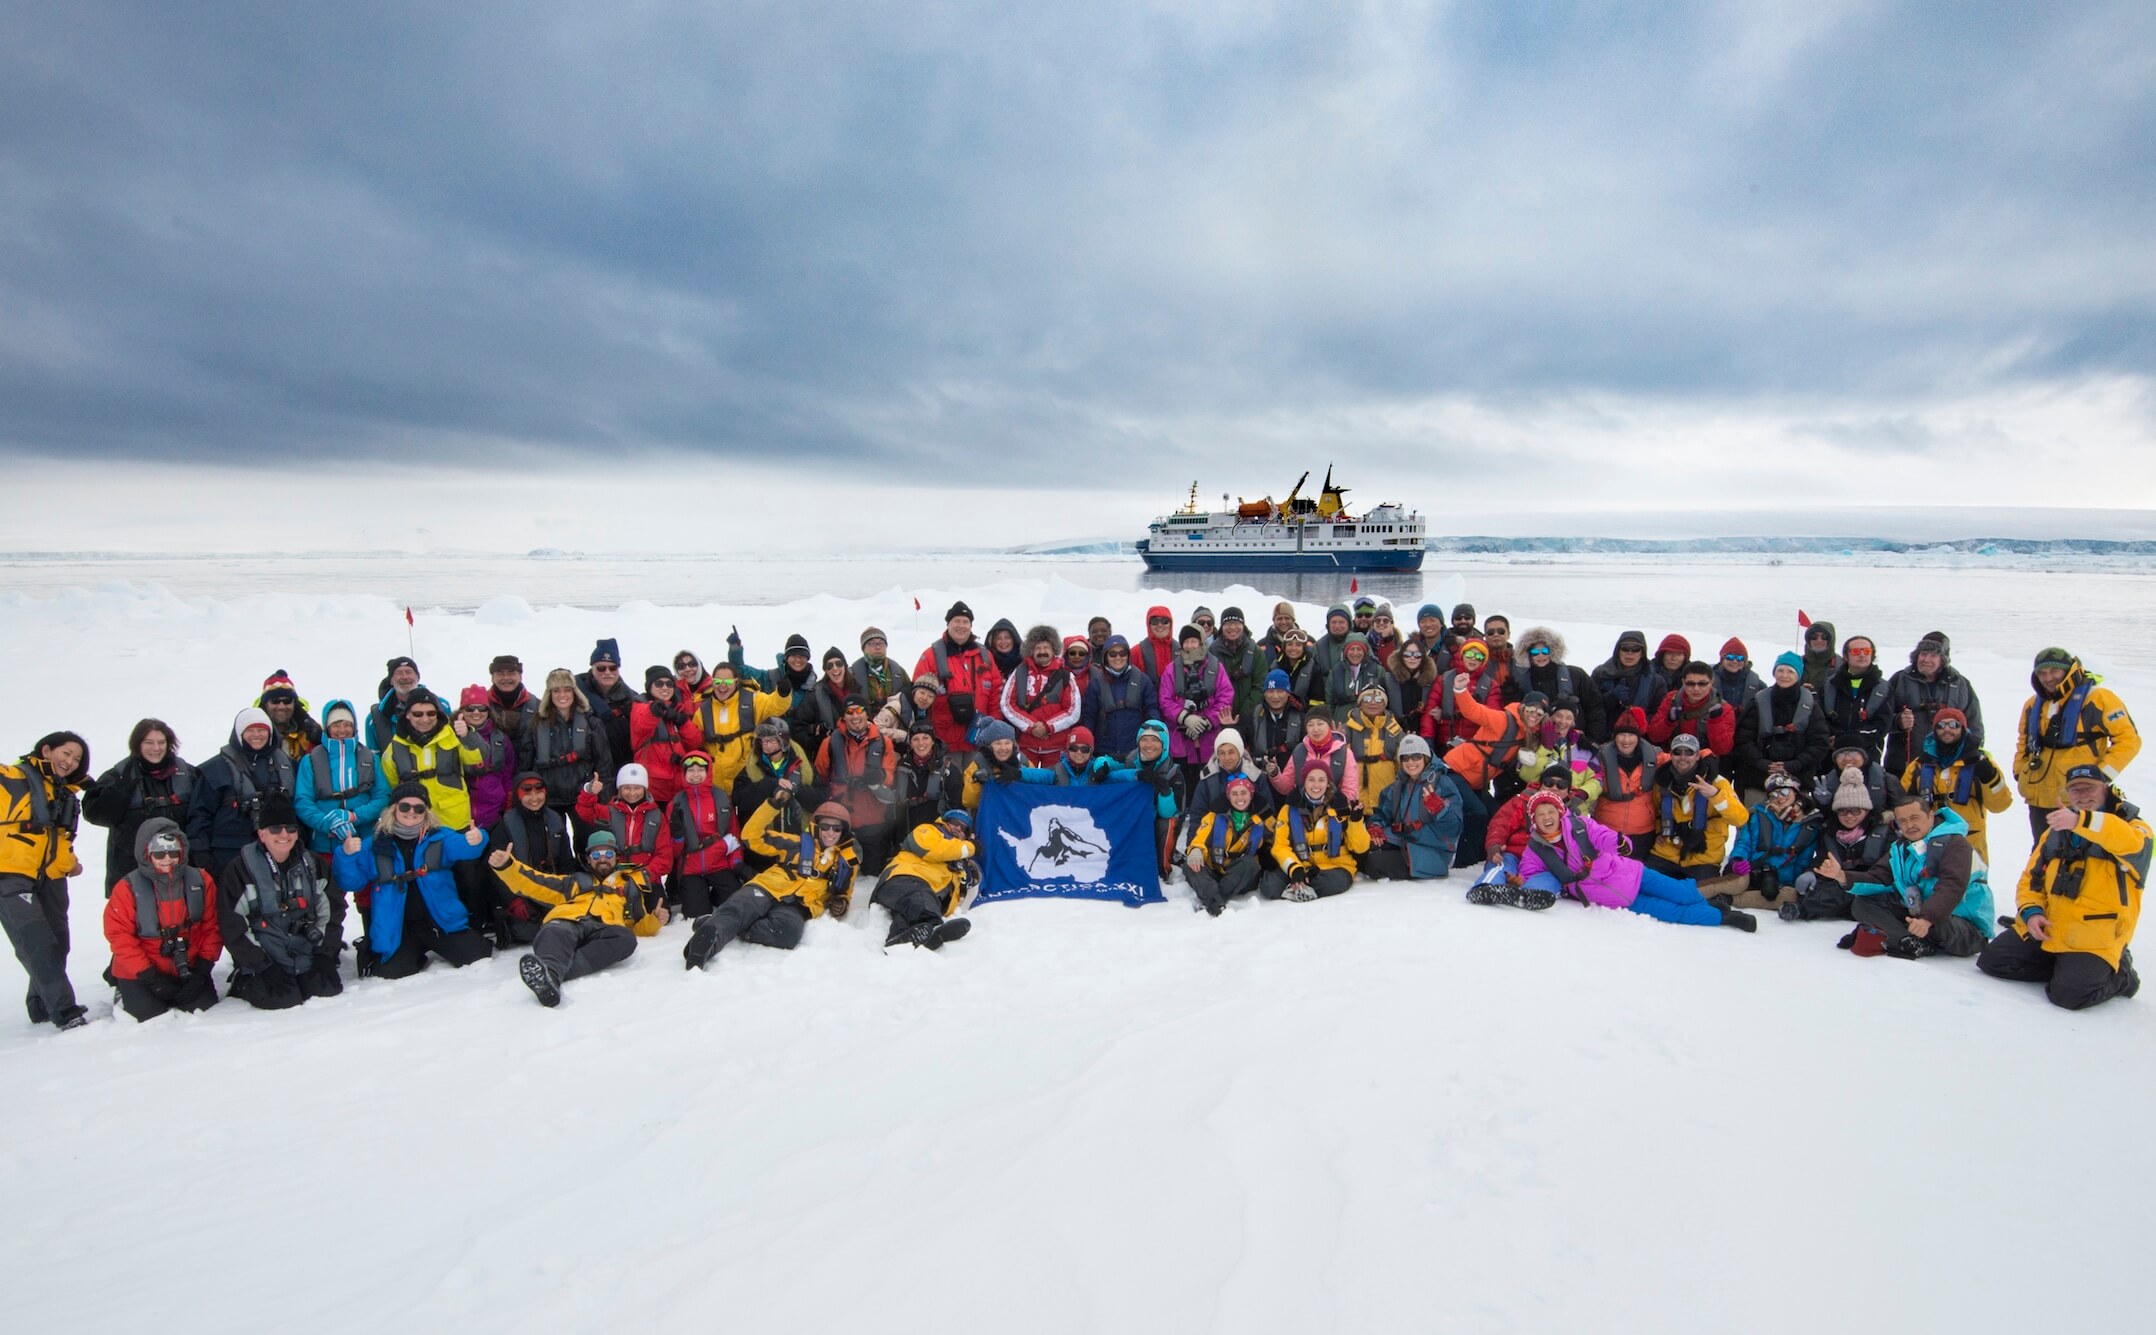 Antarctica21 guests and expedition team in Antarctica